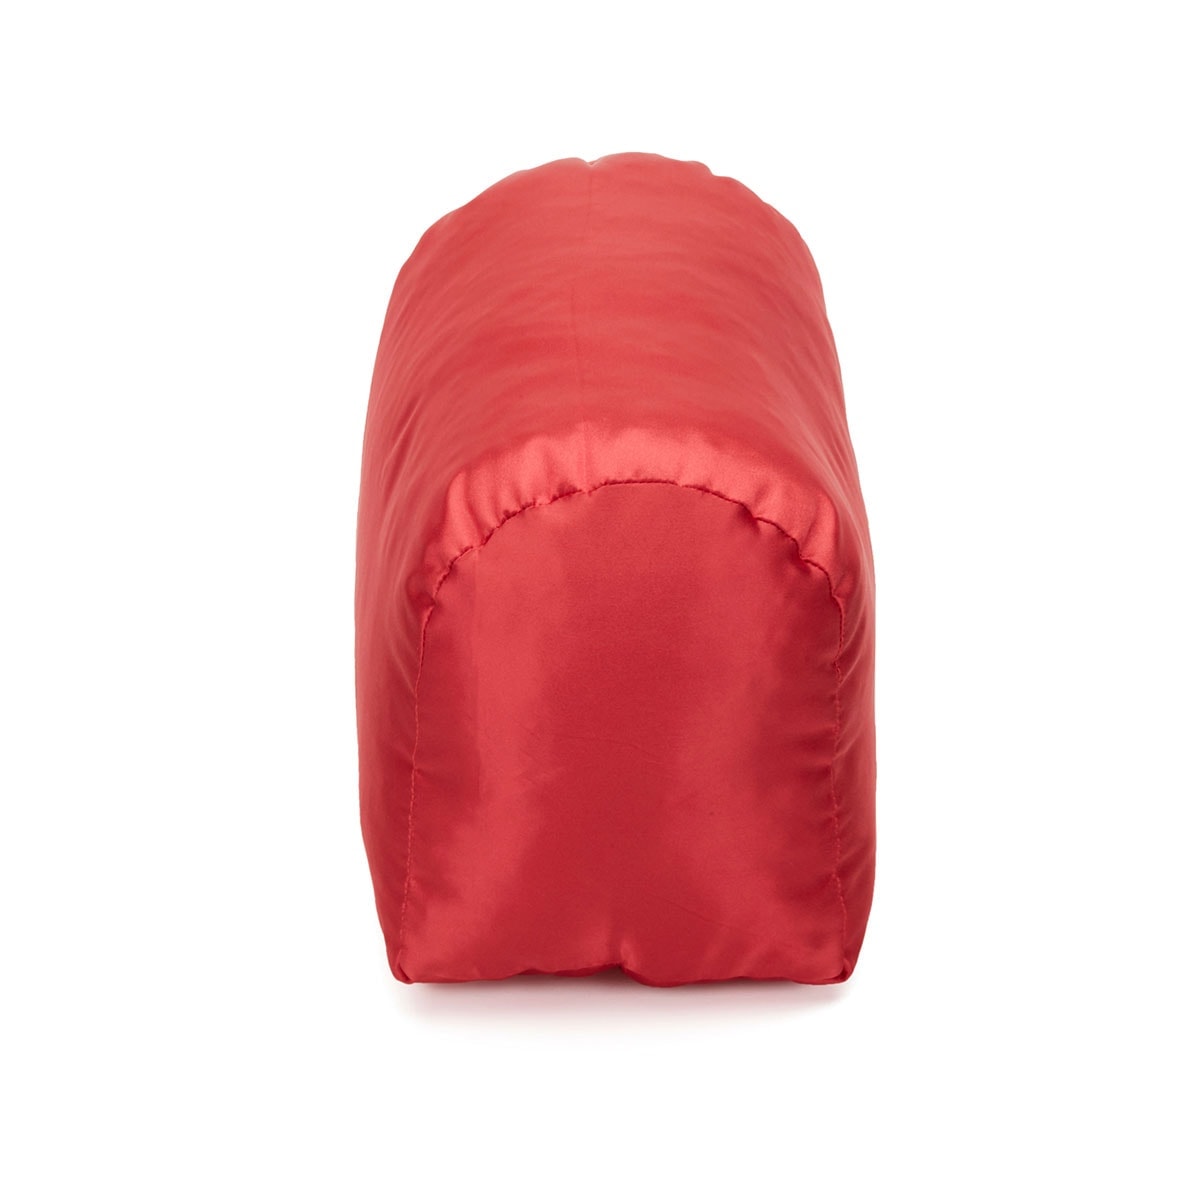 Satin Pillow Luxury Bag Shaper For Louis Vuitton's Speedy 25, Speedy 30,  Speedy 35 and Speedy 40 in Red